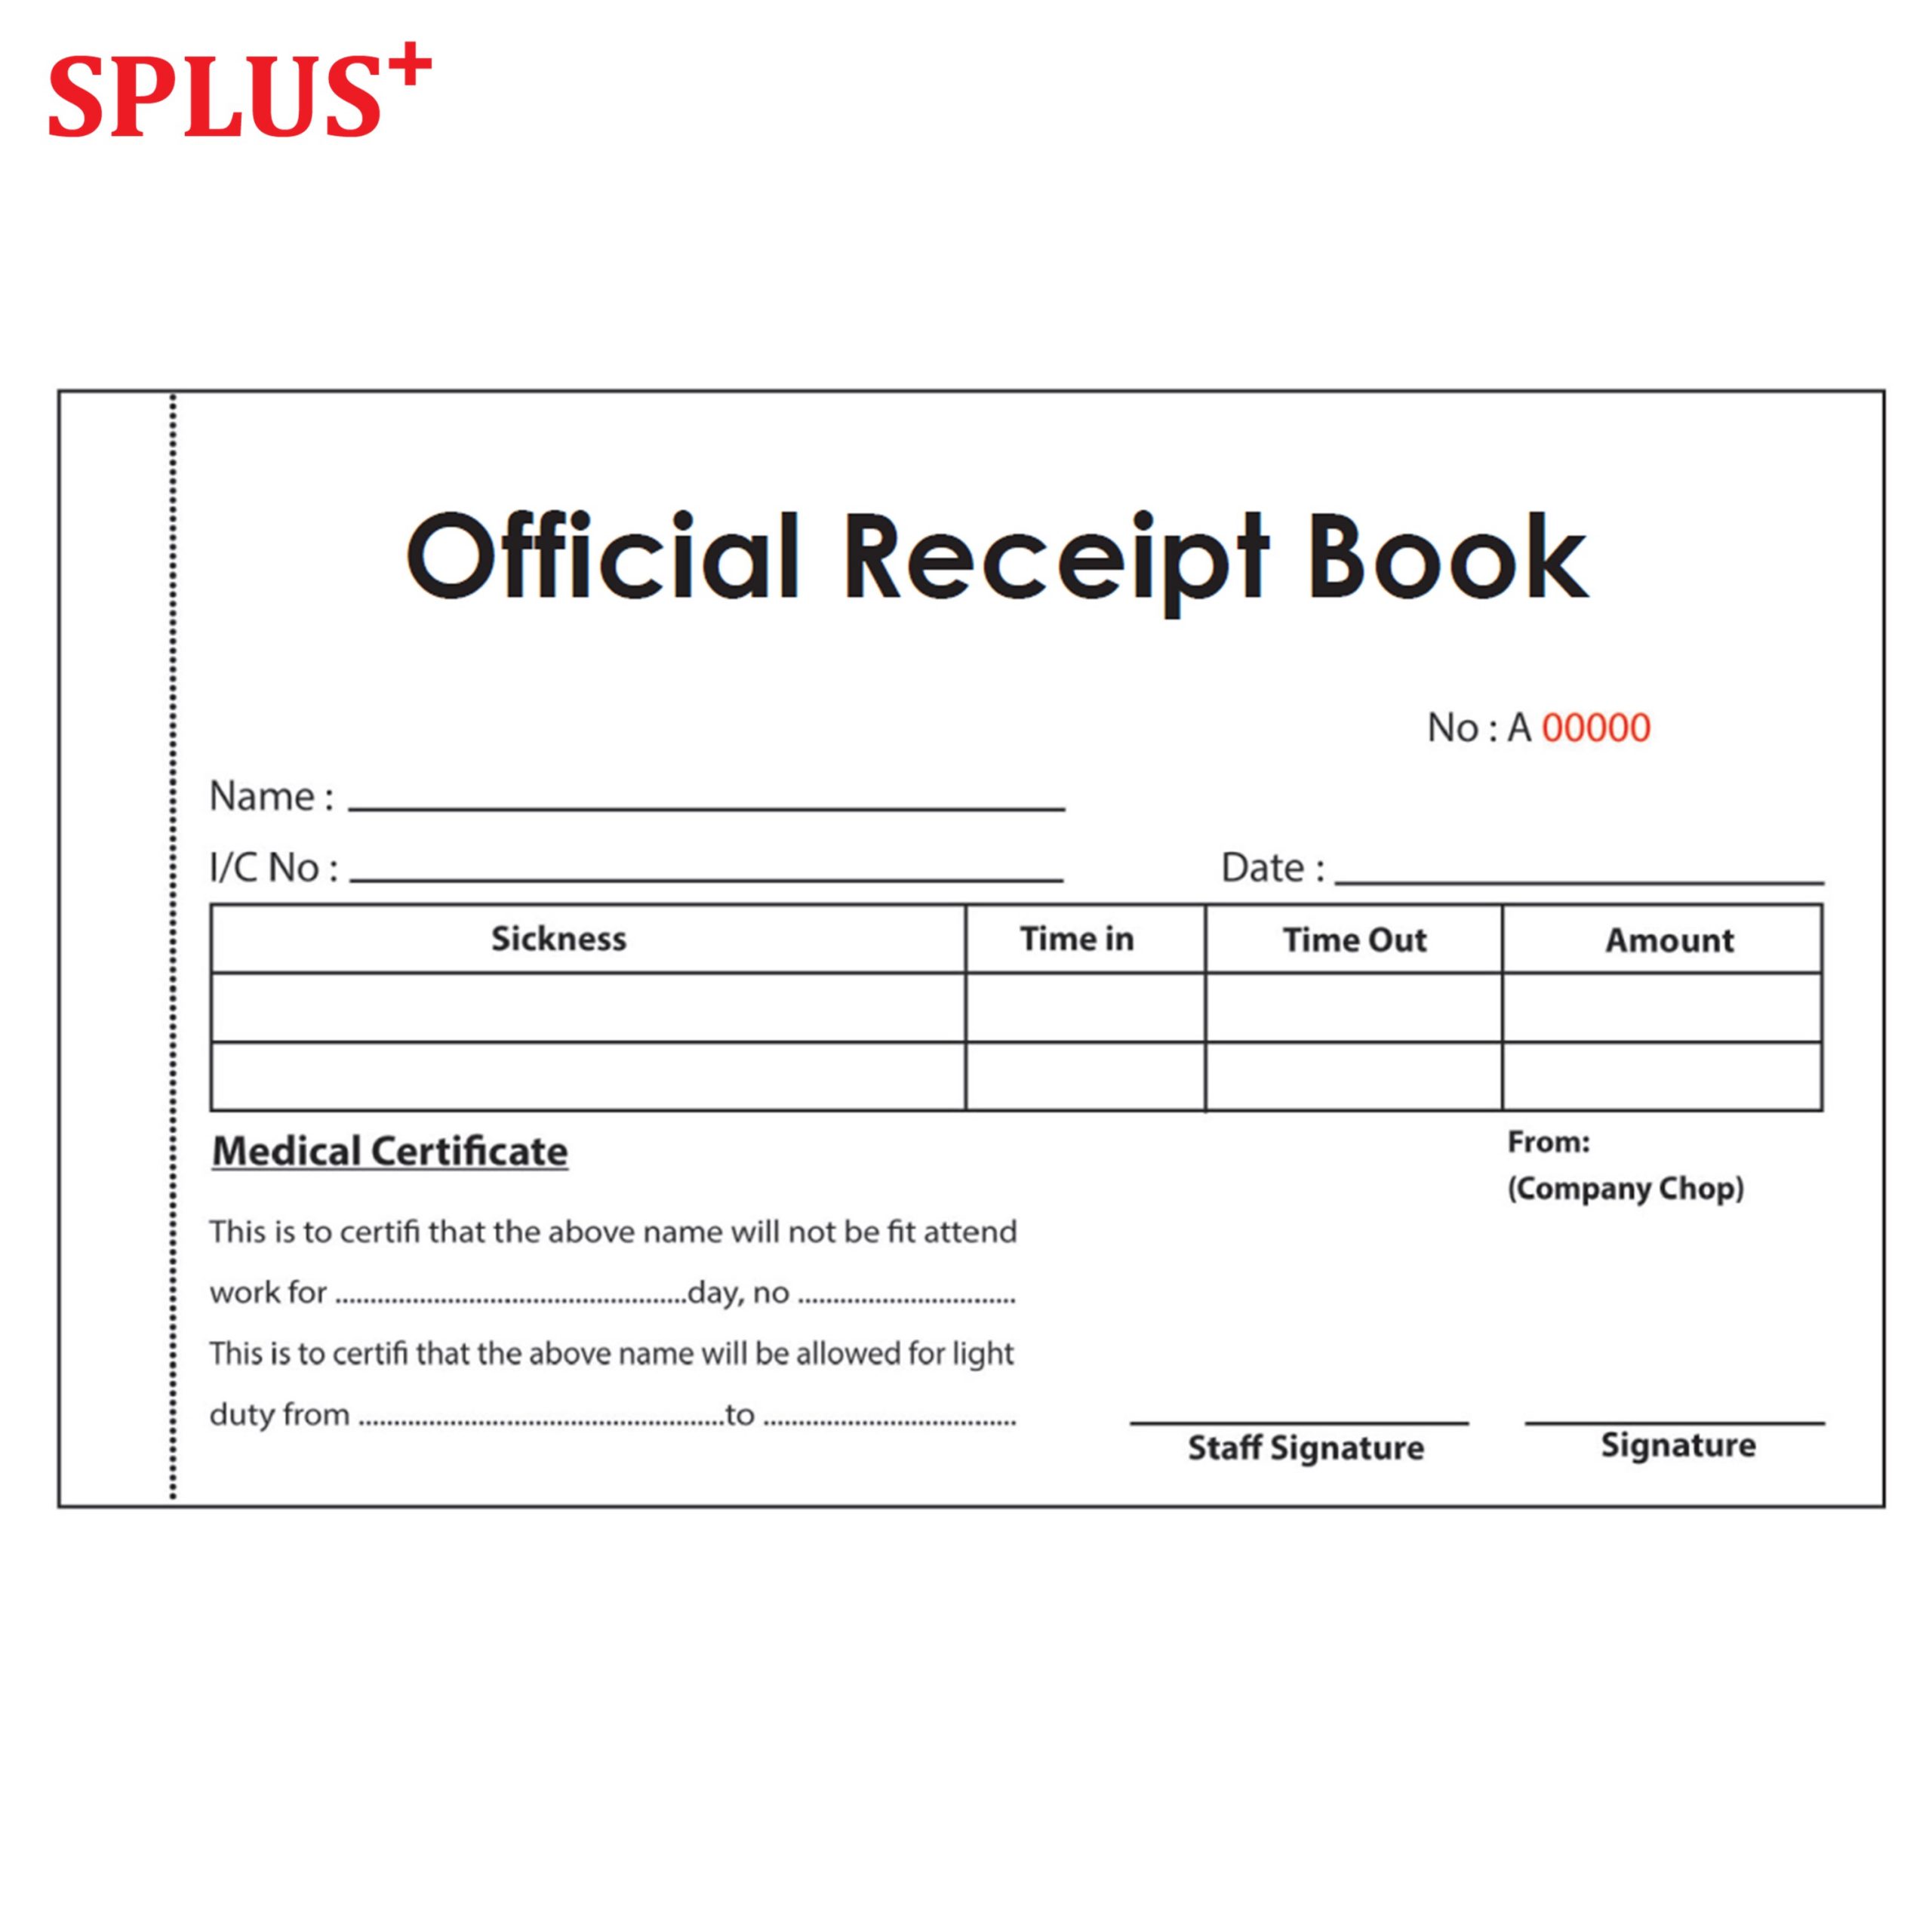 Official Receipt Book SPlus Medicare